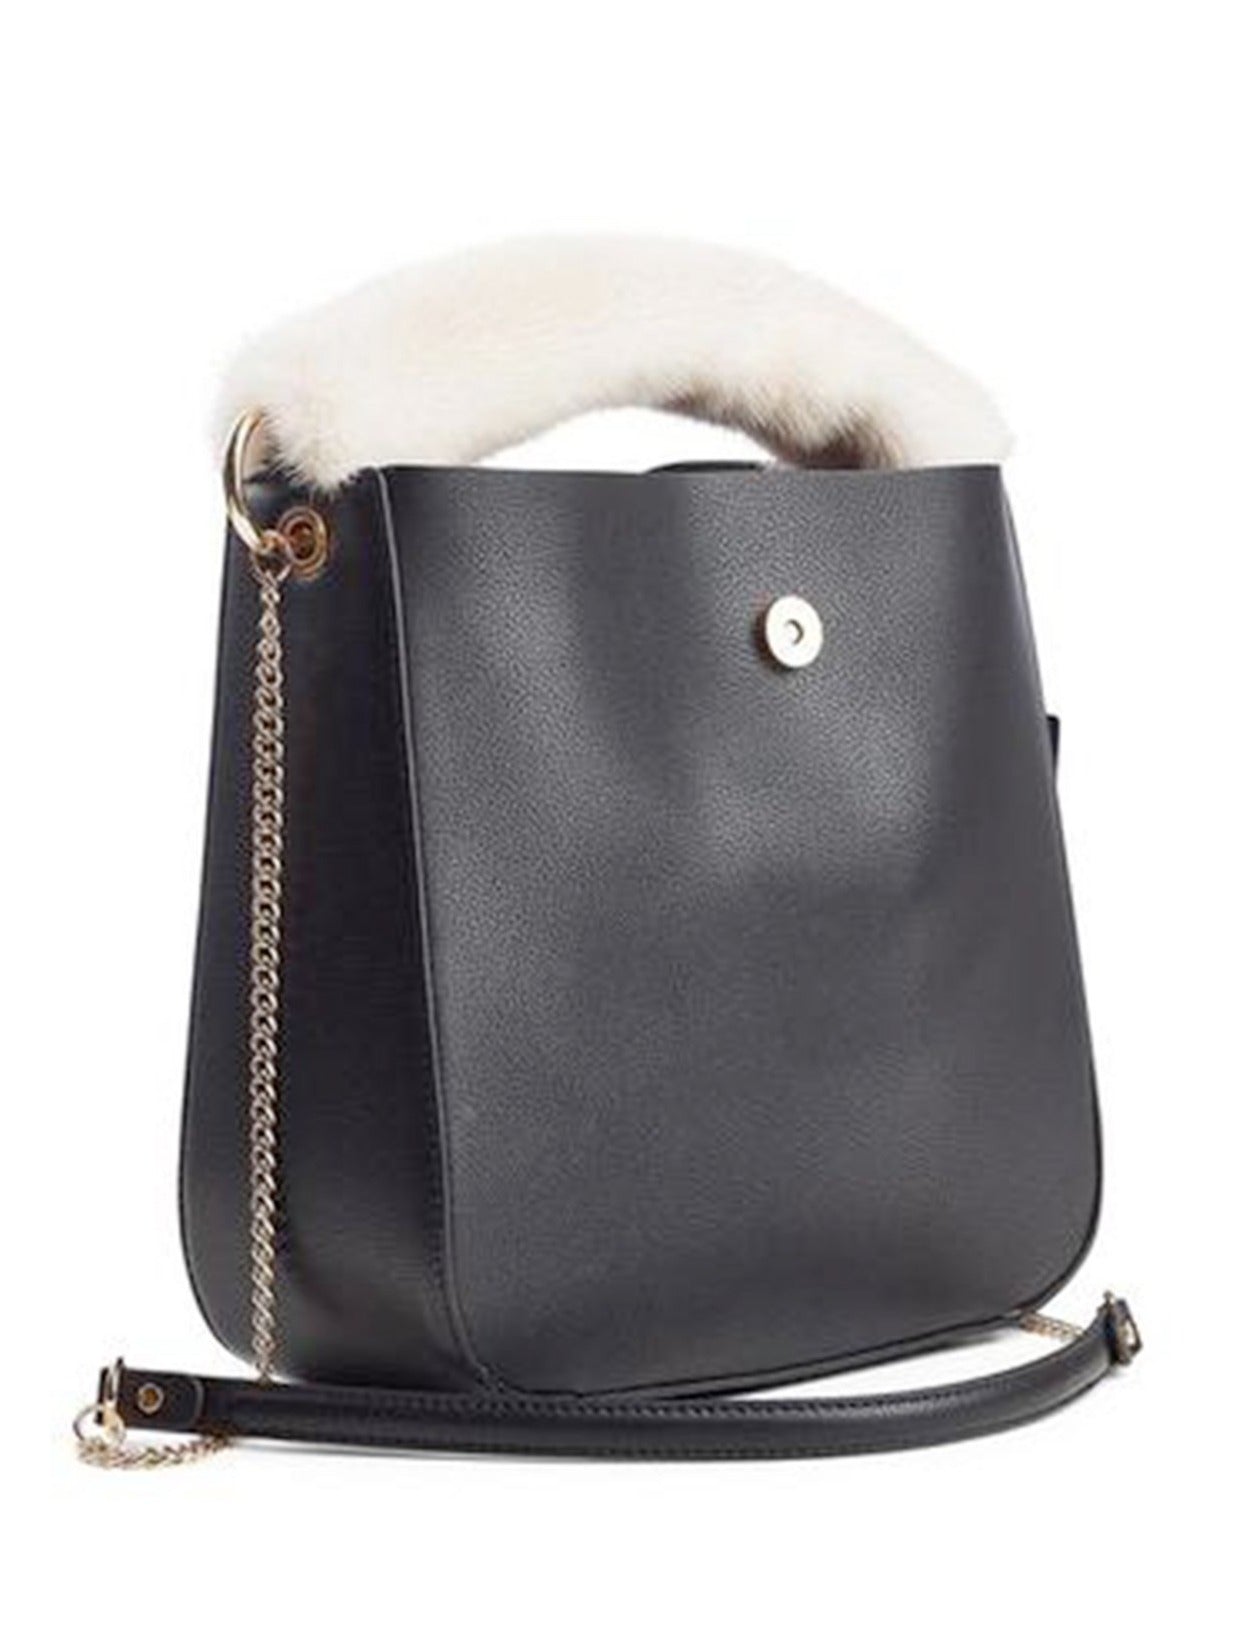 Krone 1 - Bag strap with zipper in mink